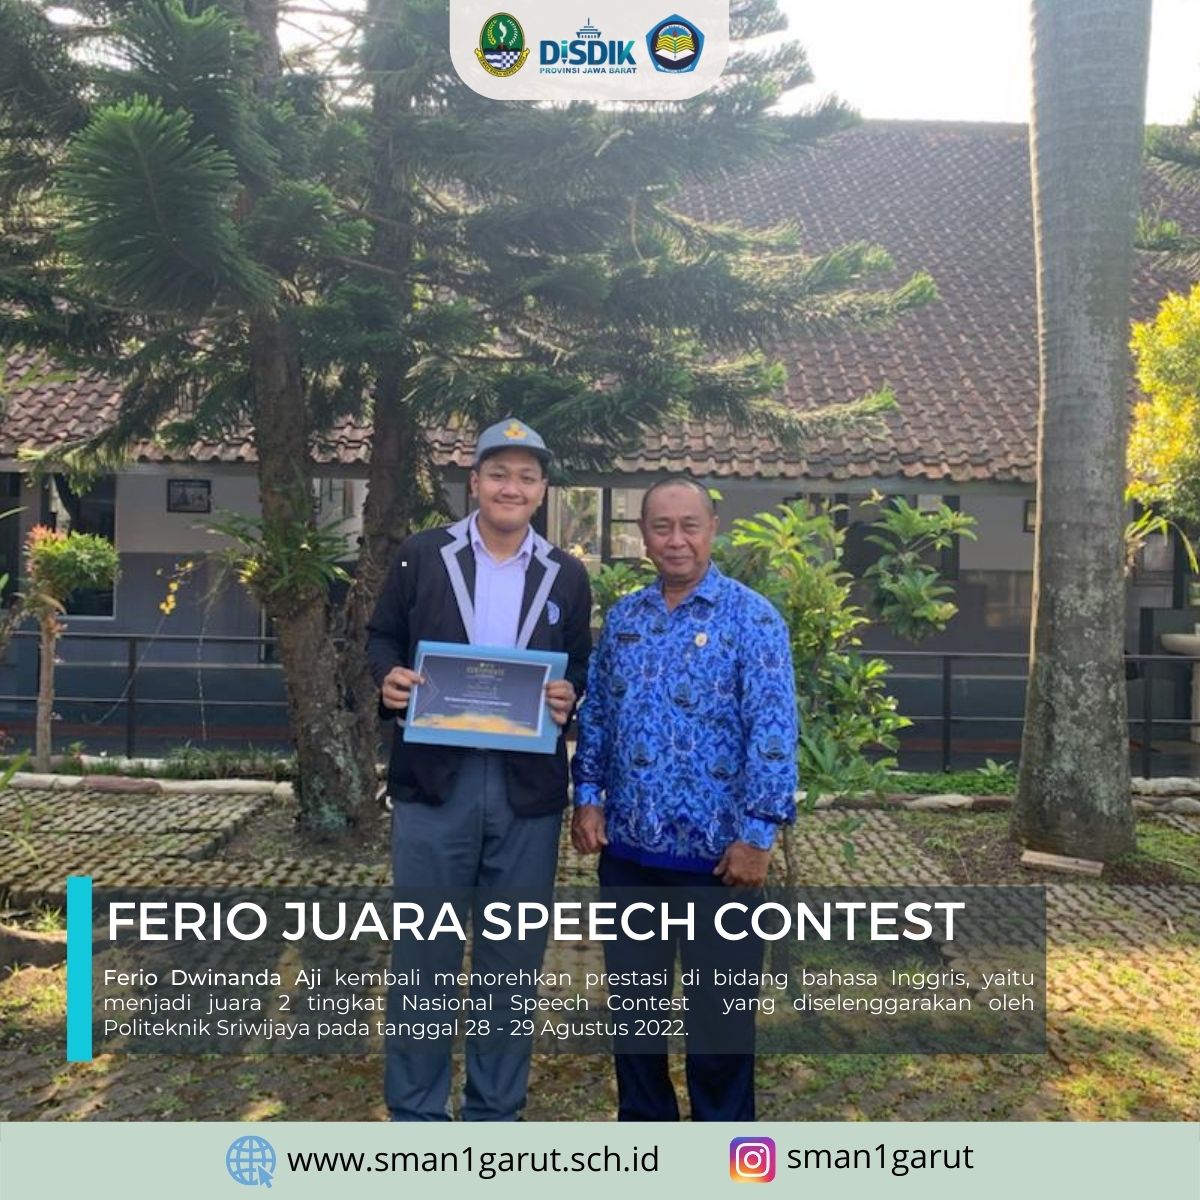 Ferio Juara Speech Contest di Politeknik Sriwijaya